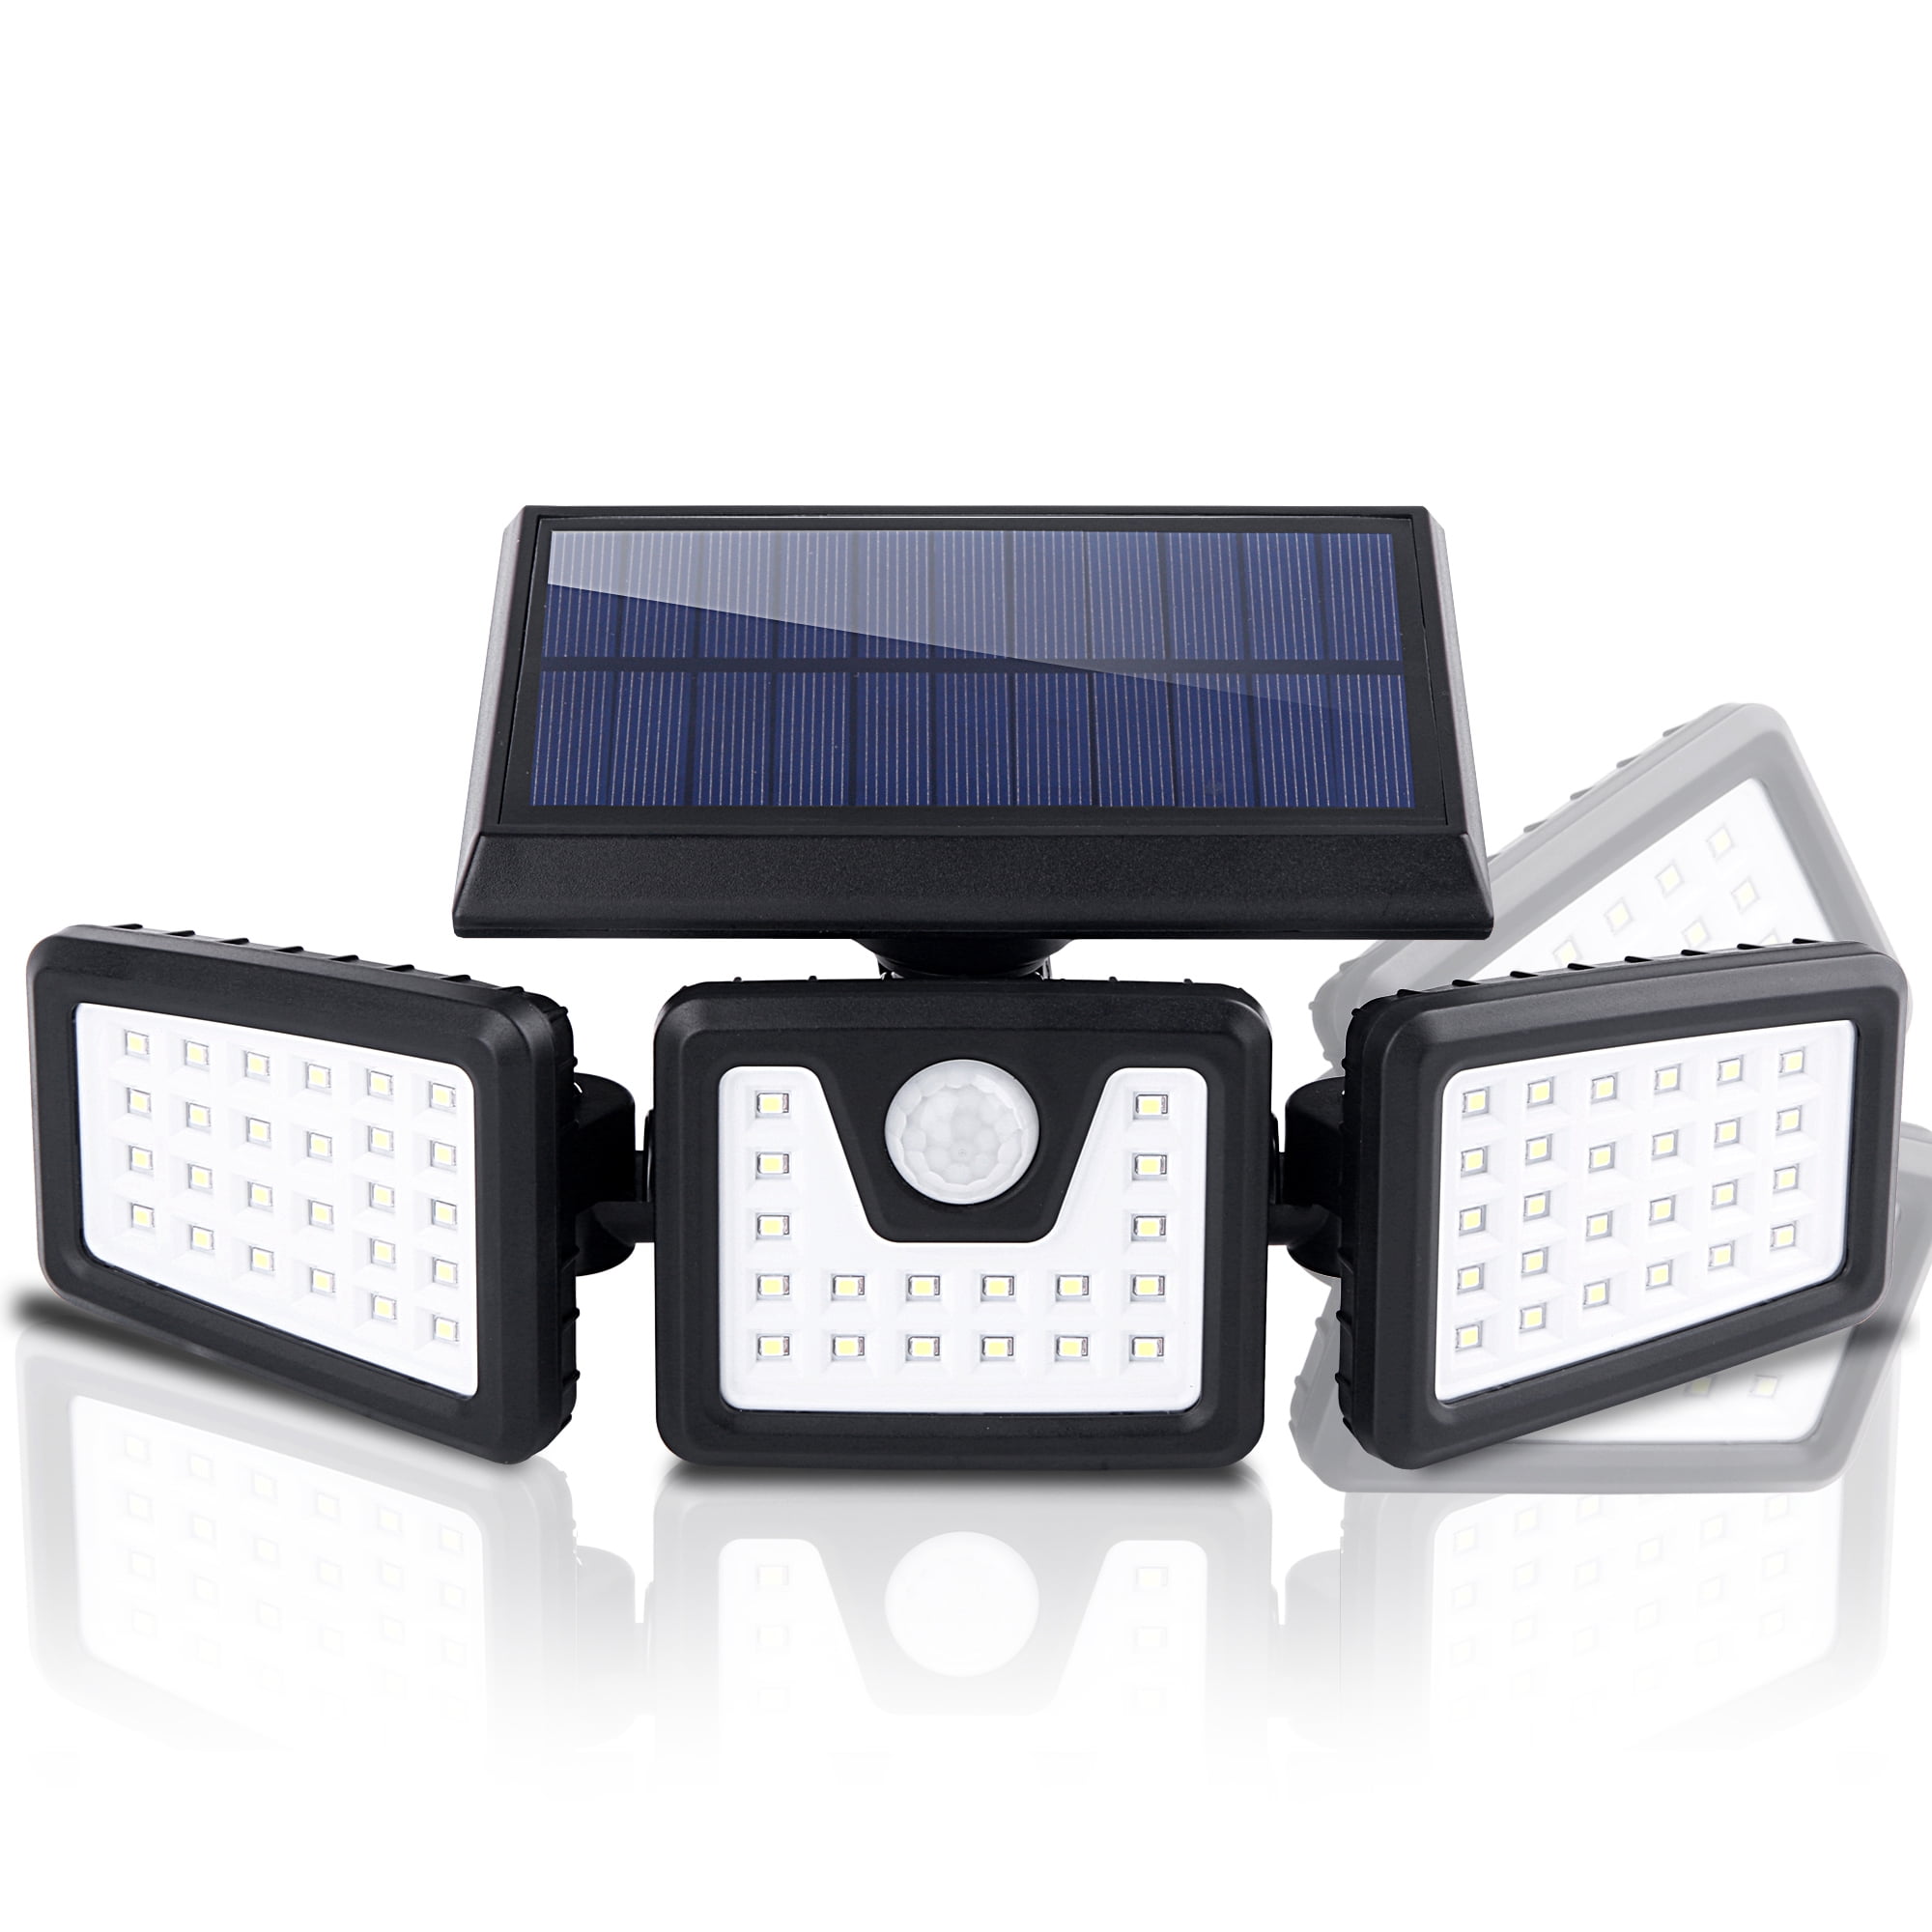 Details about   70 LED Solar Light Remote Control PIR Motion Sensor Outdoor Flood light Hot